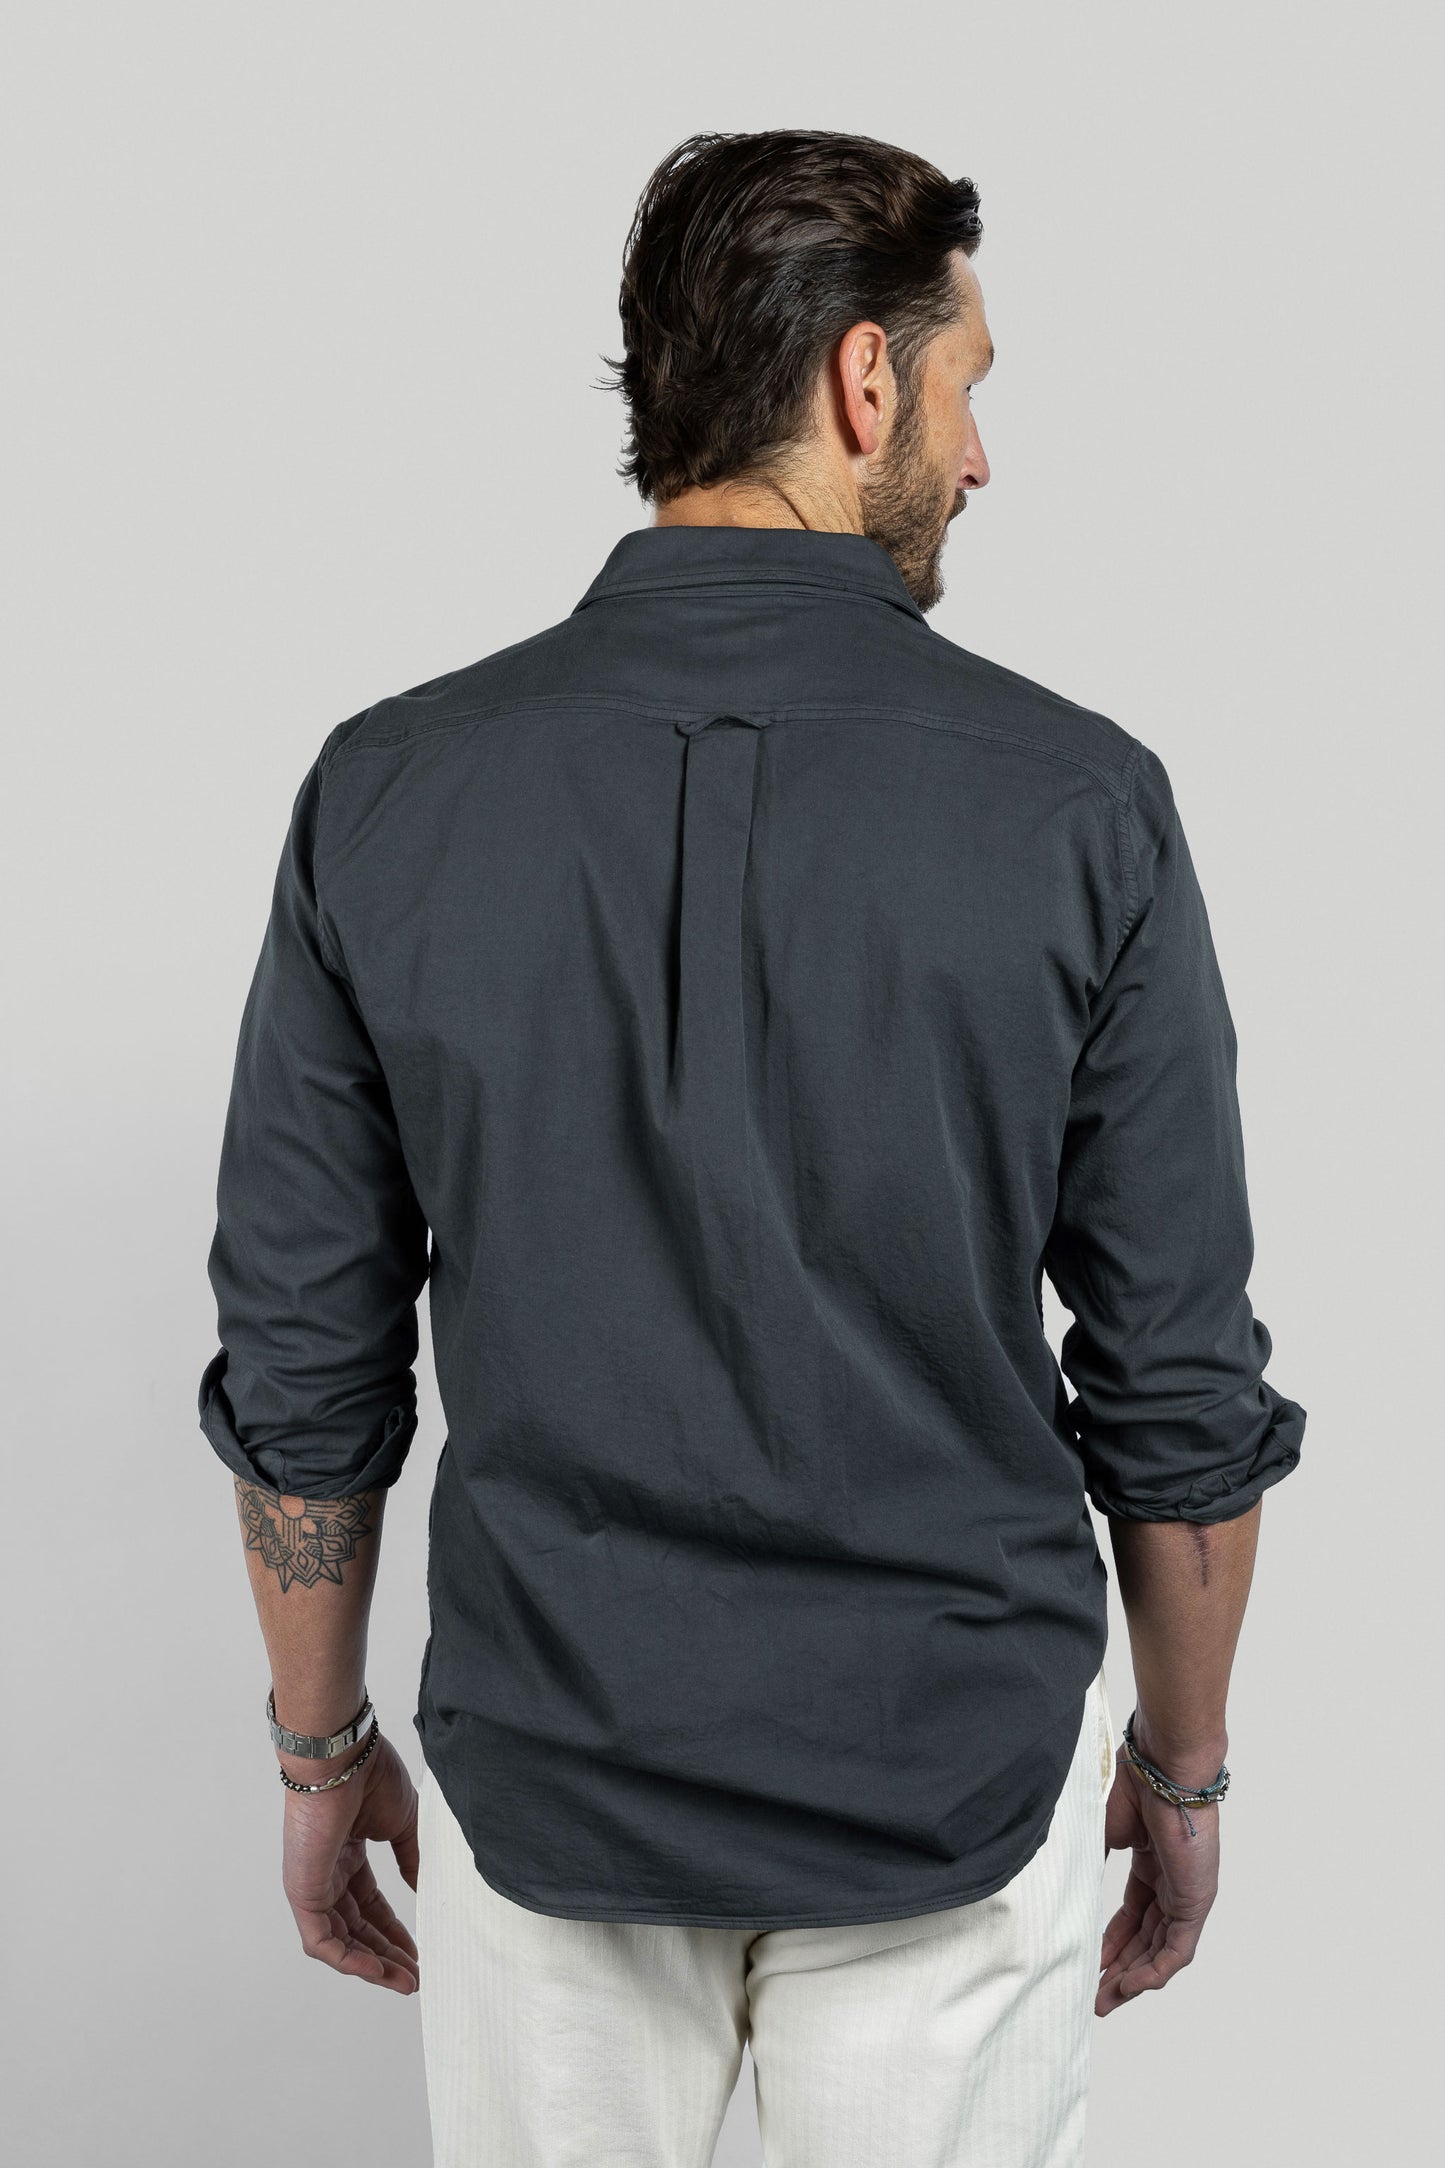 Tarpon Garment Dyed Utility Shirt in Faded Black